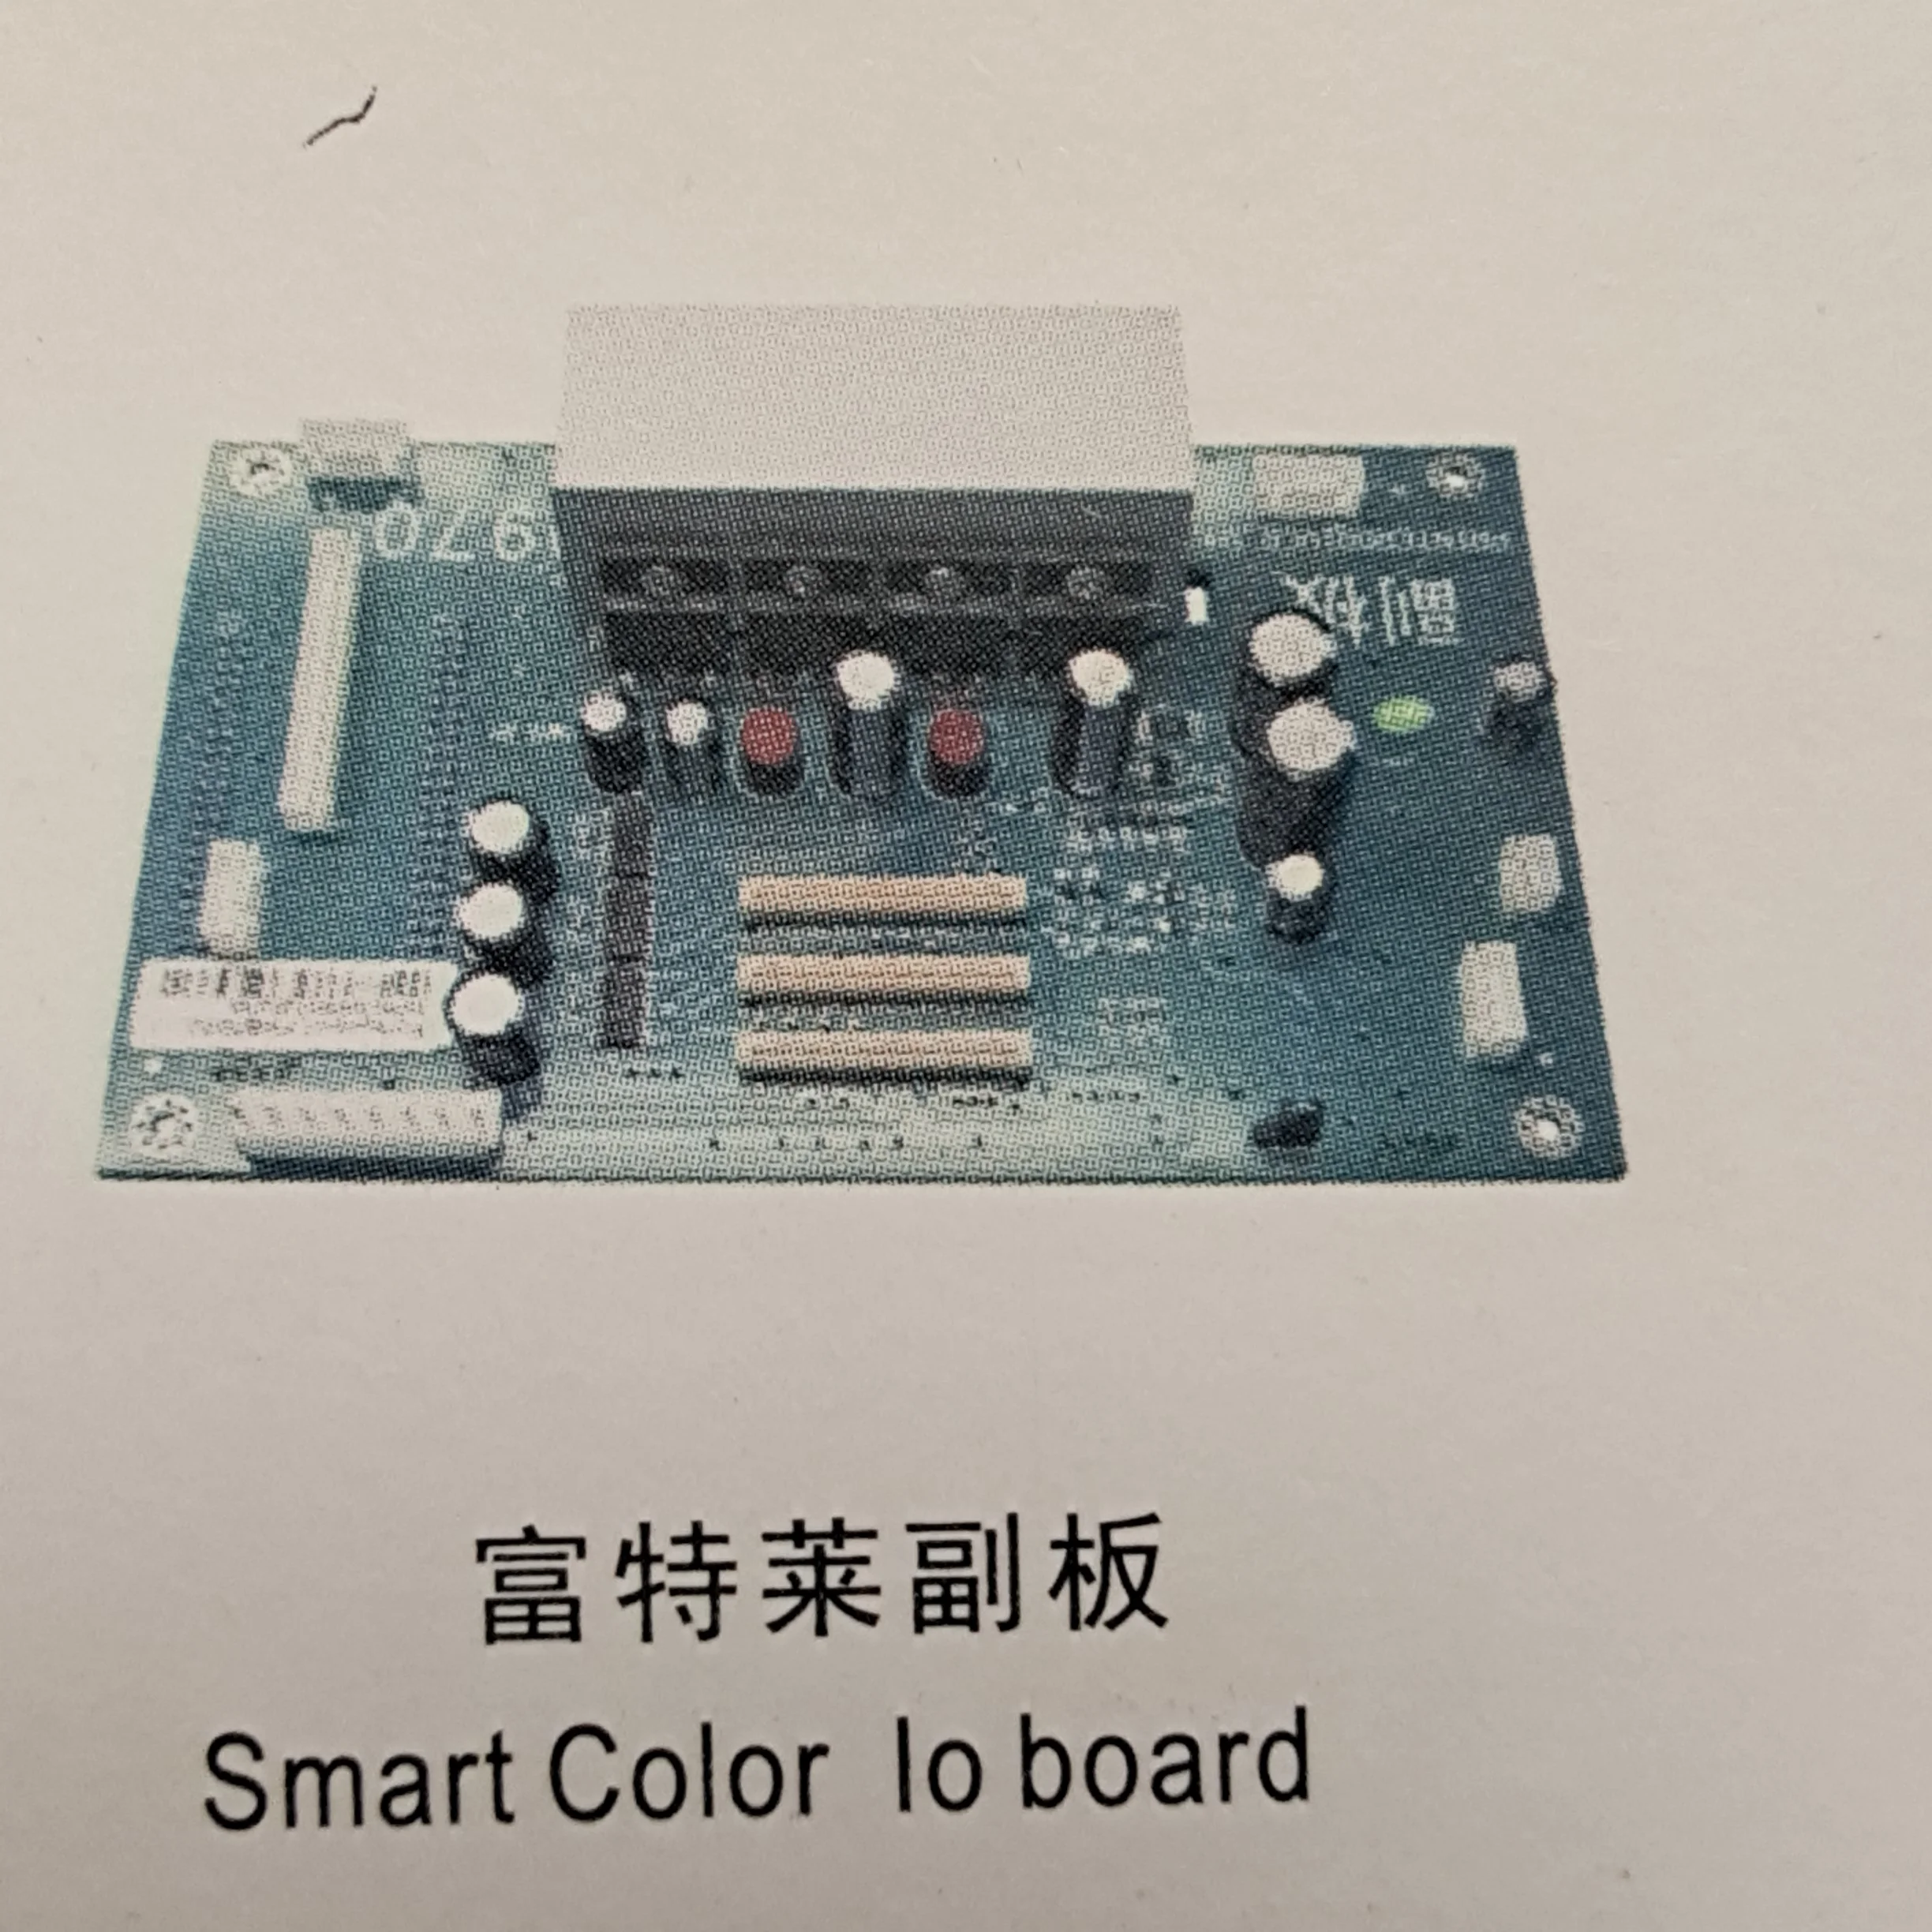 Smart farebný IO rada Smart farebná tlačiareň IO rada . ' - ' . 0